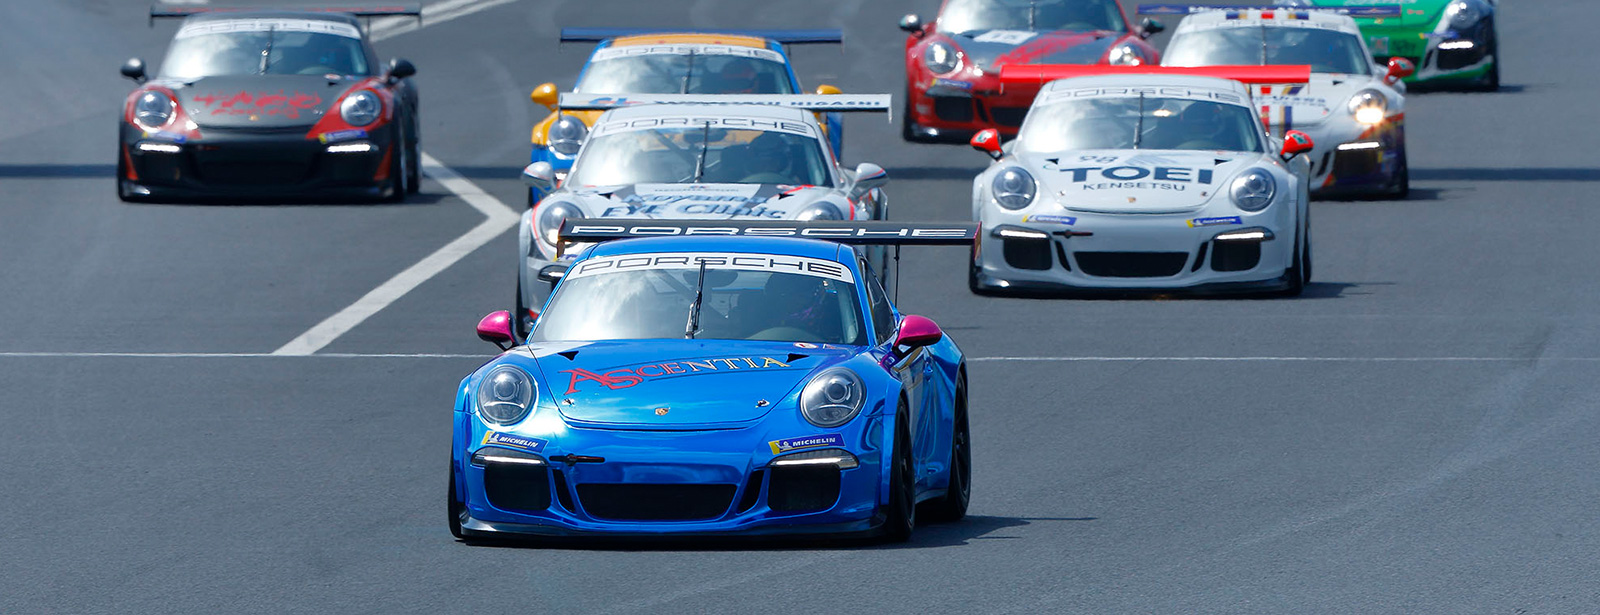 Porsche - ポルシェ スプリント チャレンジ ジャパン